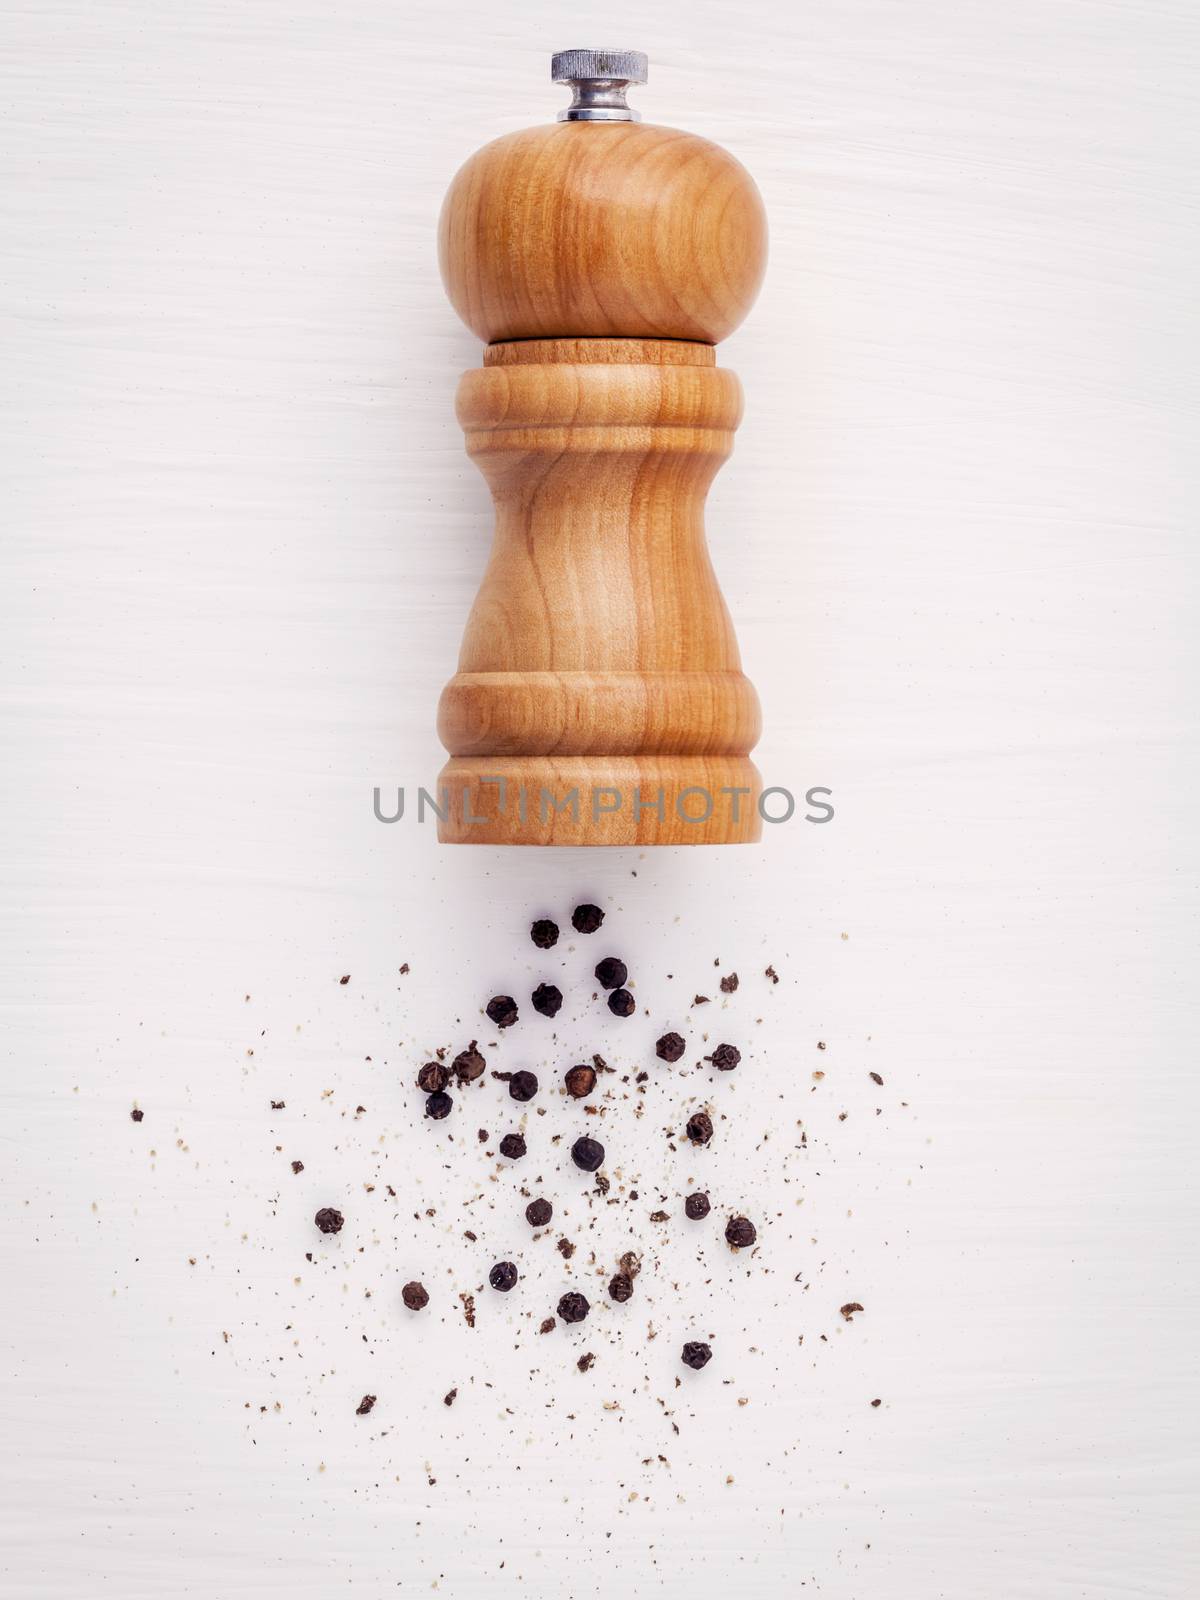 Close up of bottle black pepper mill on white wood table. Season by kerdkanno